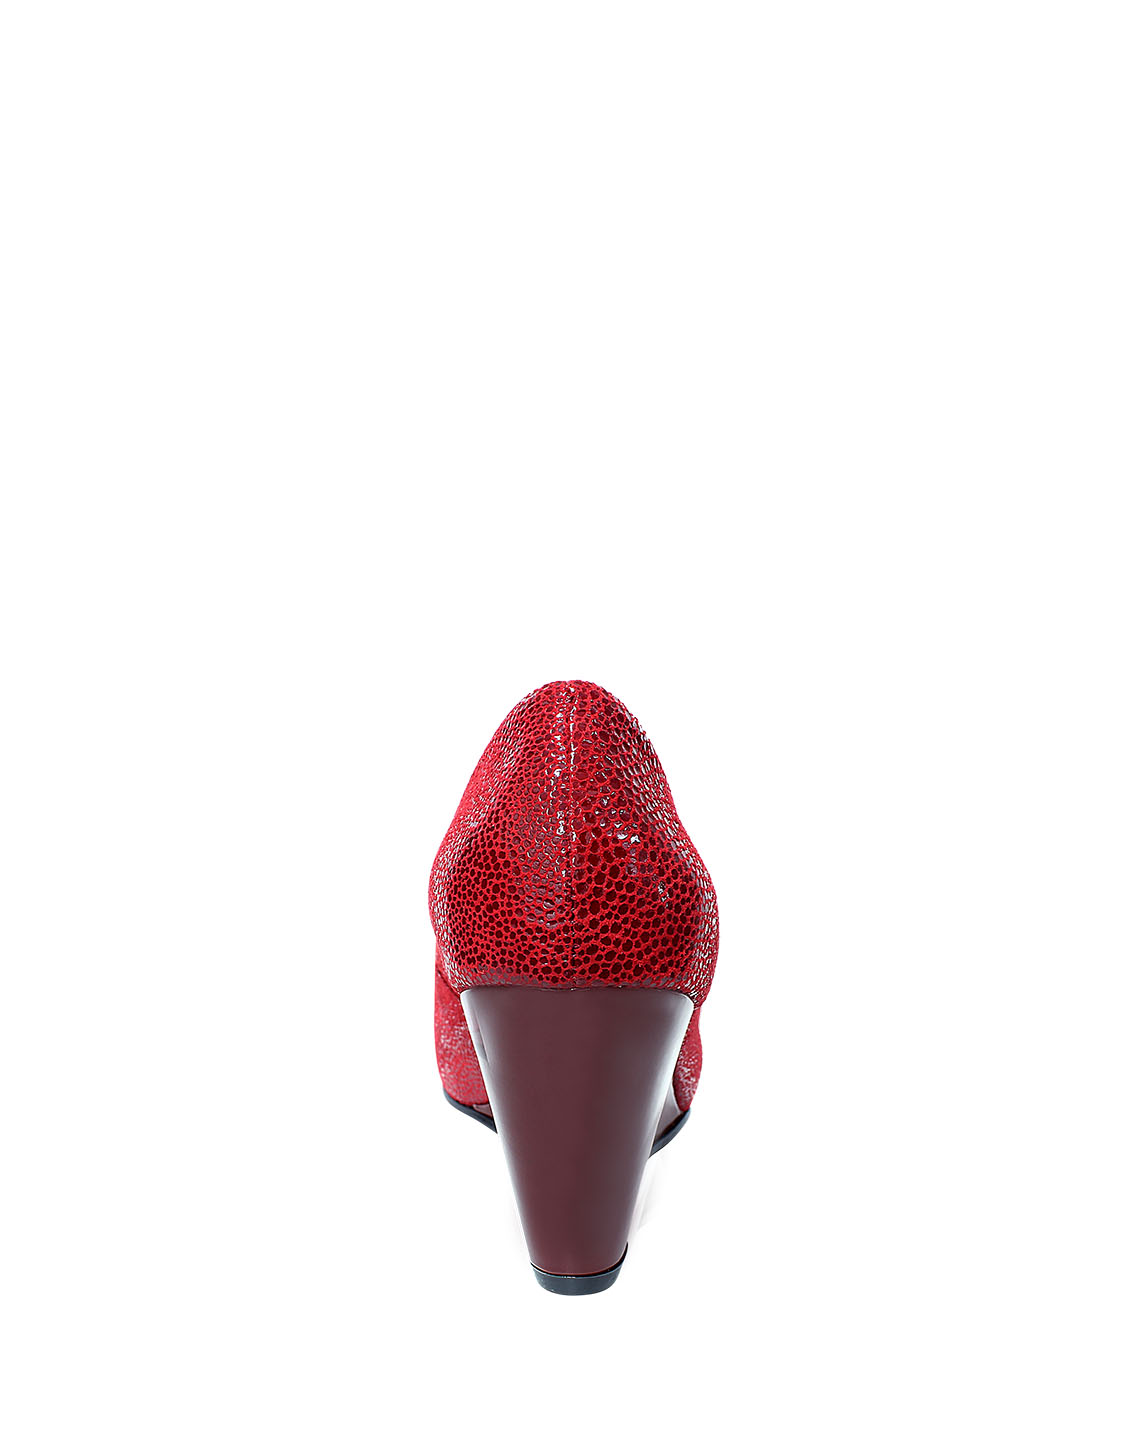 Calzado Peep Toe FRP-7709 Color Rojo